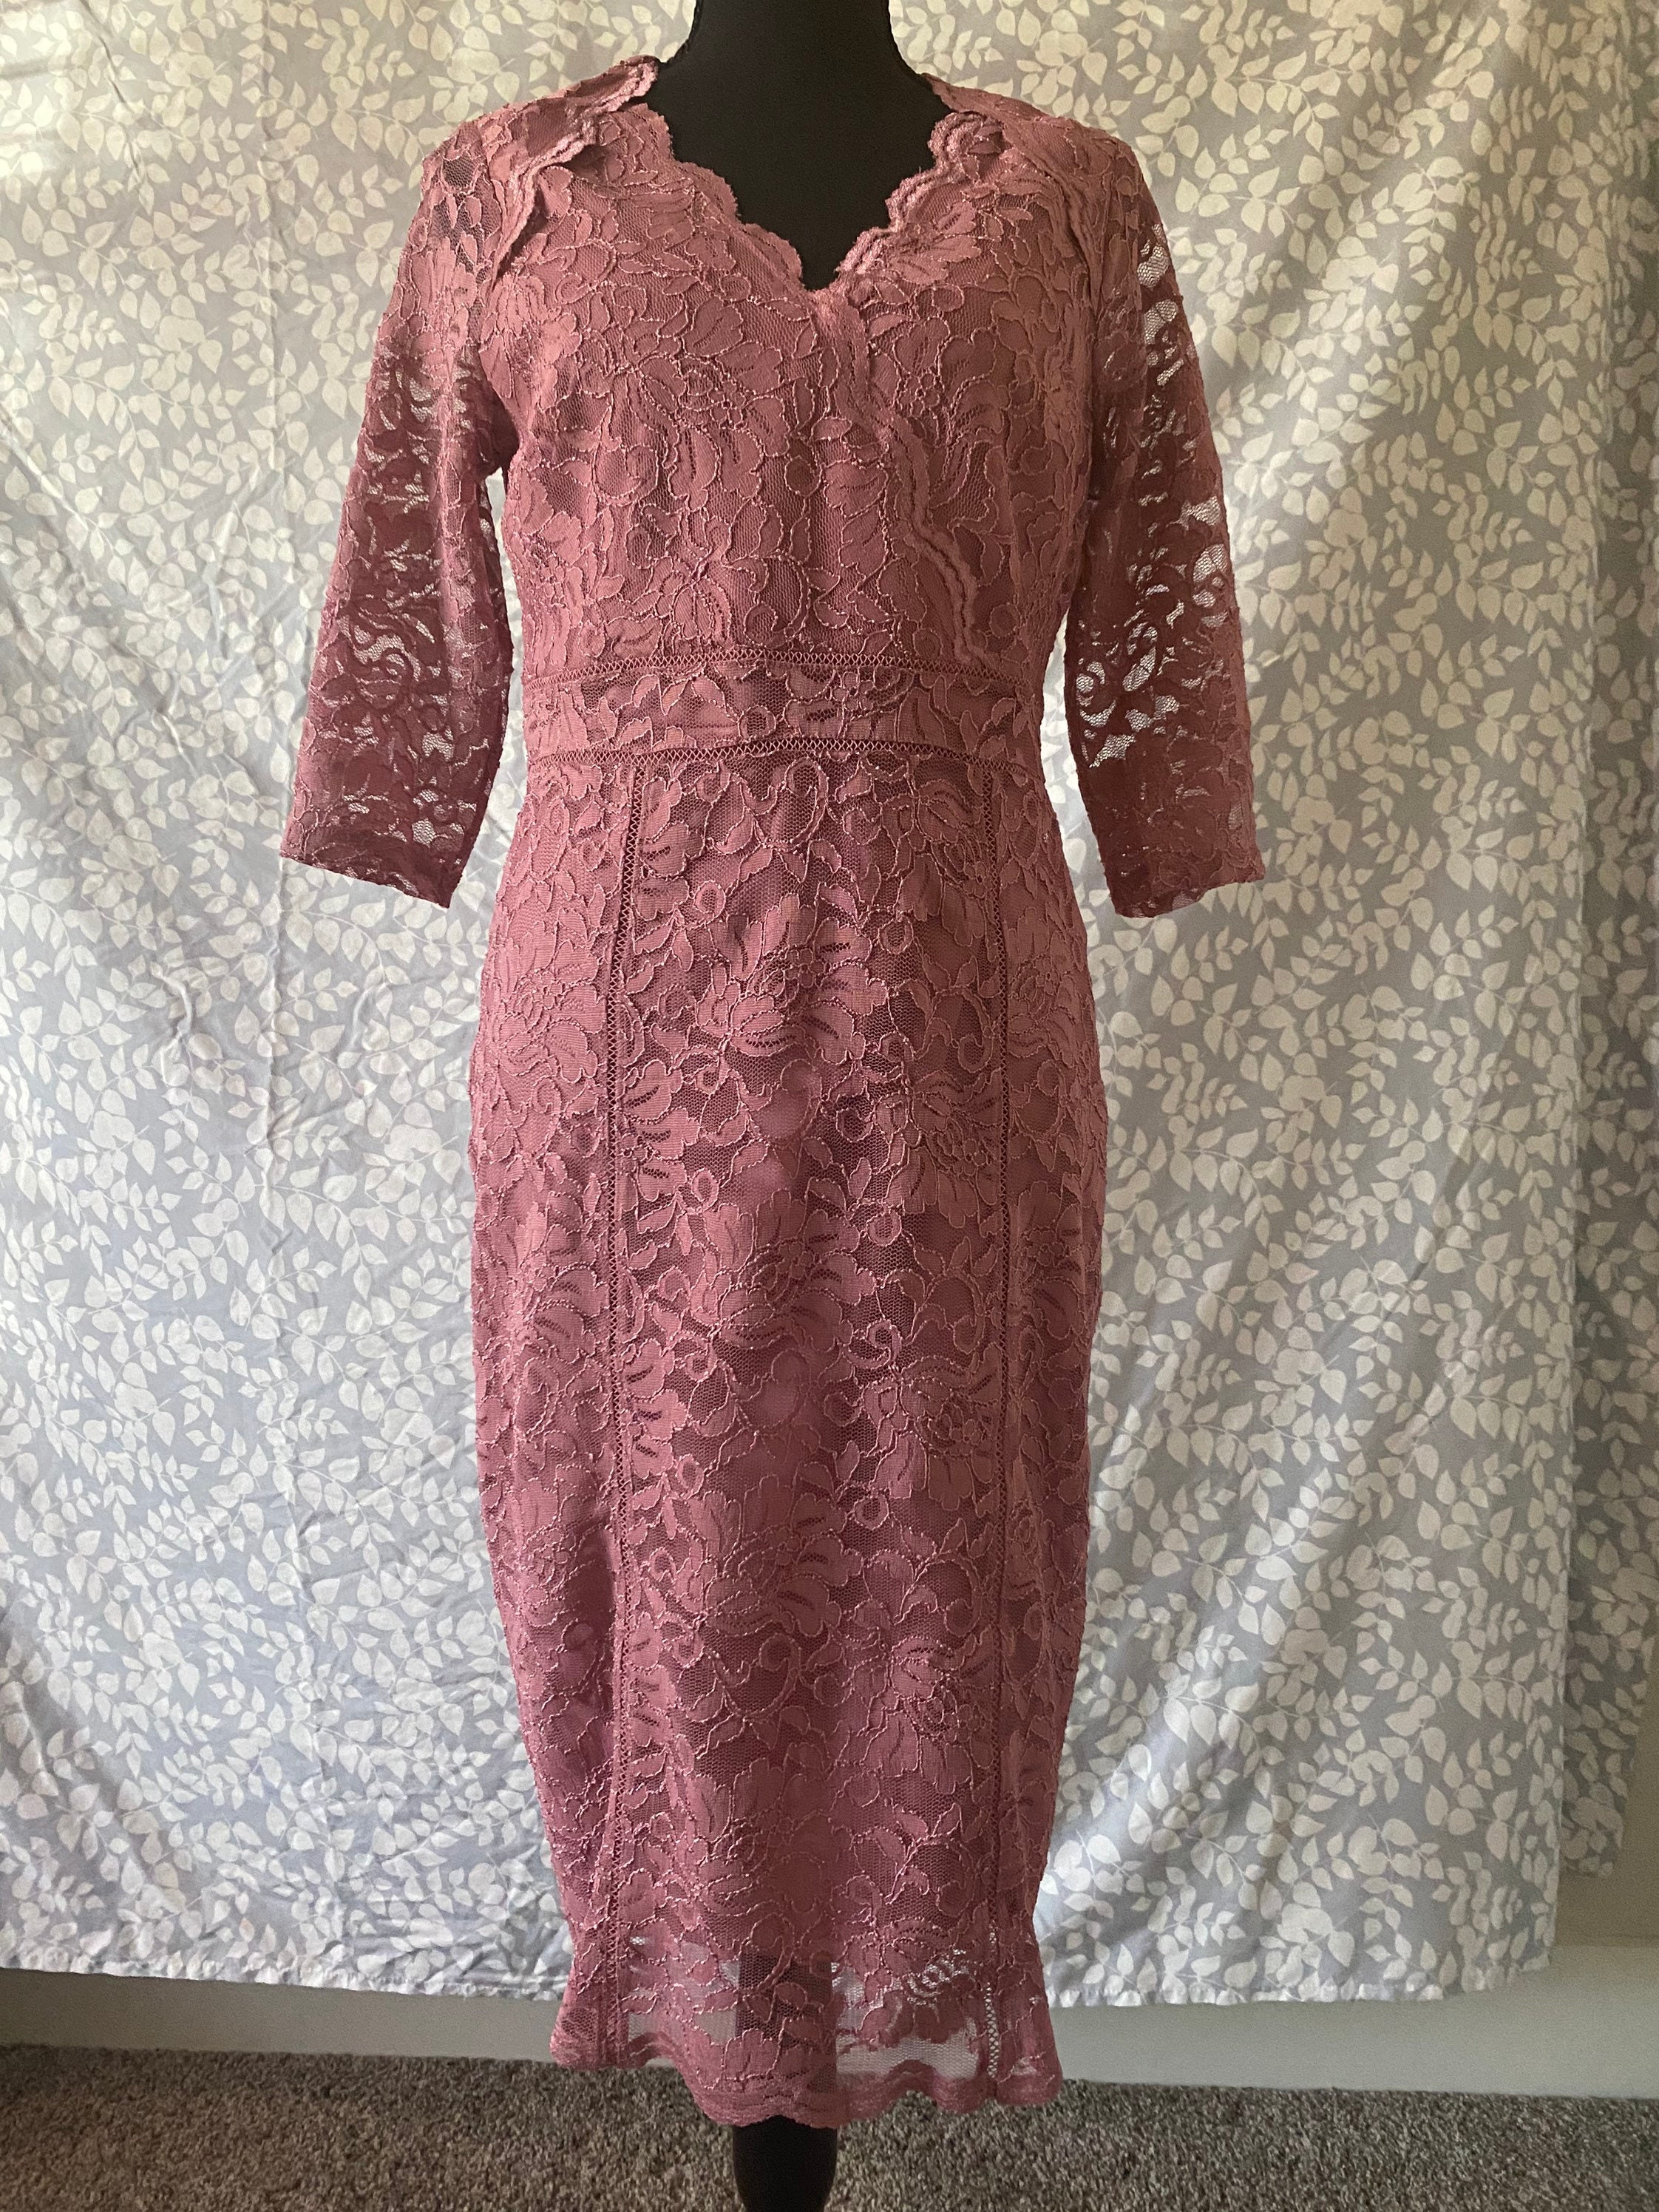 Elegant Mauve colored formal lace dress size S | Etsy